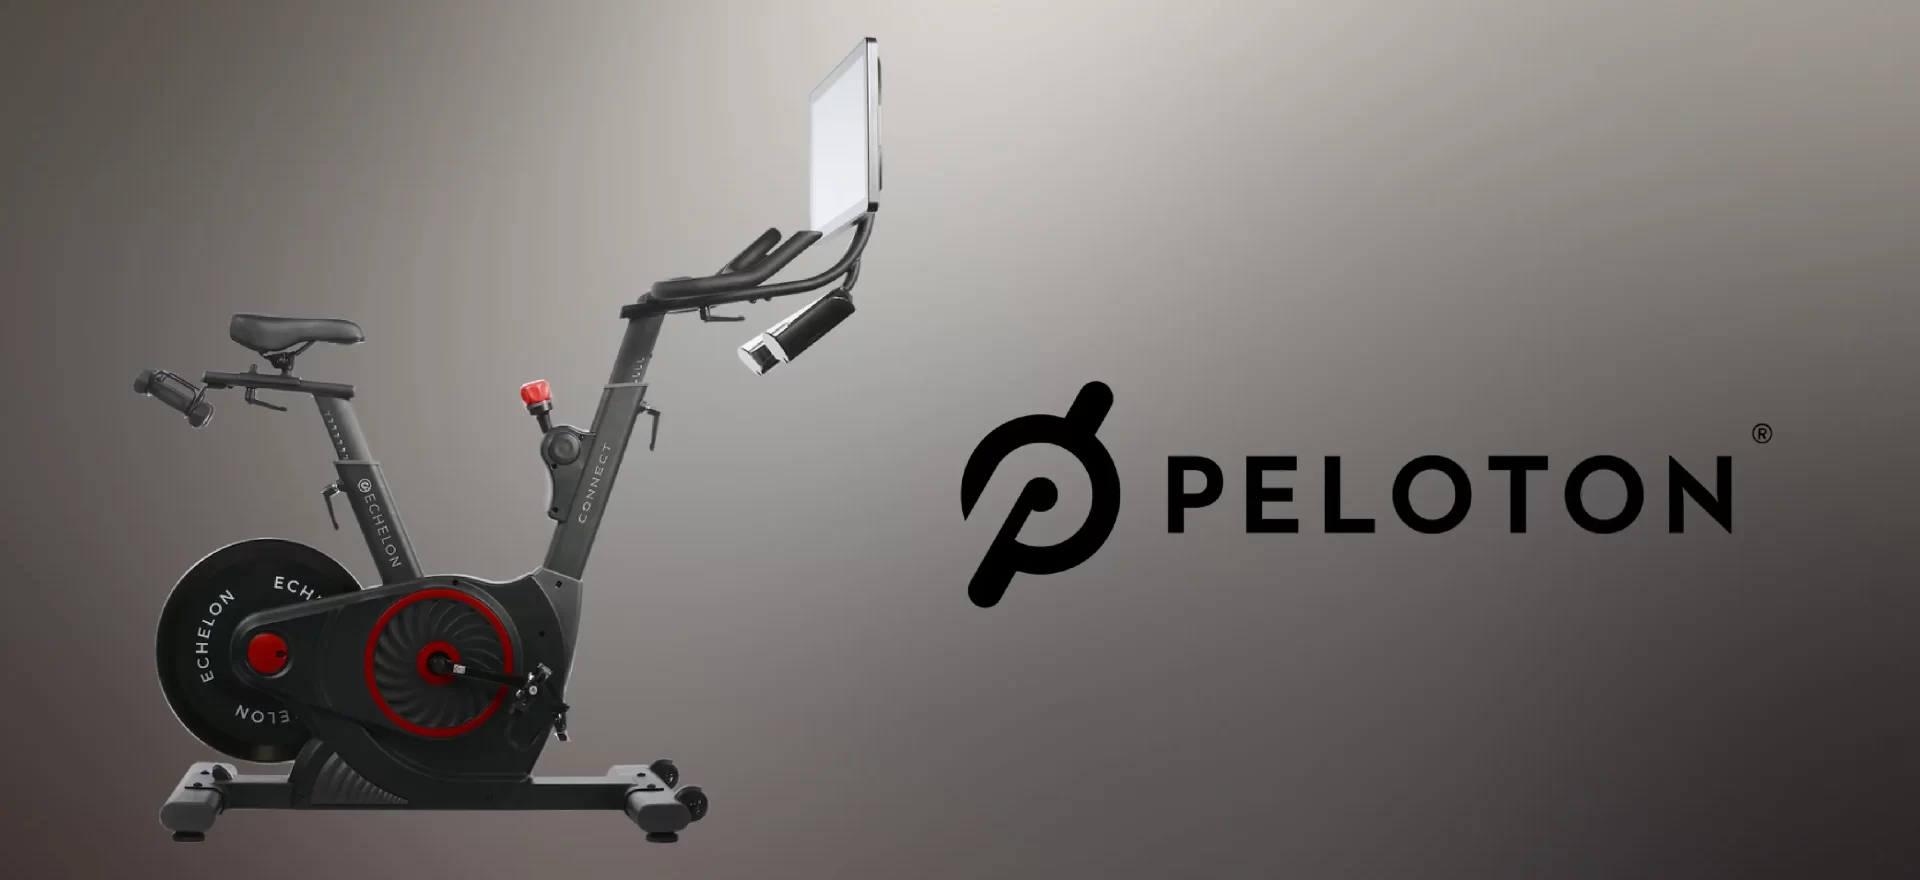 How To Connect Echelon Bike To Peloton App